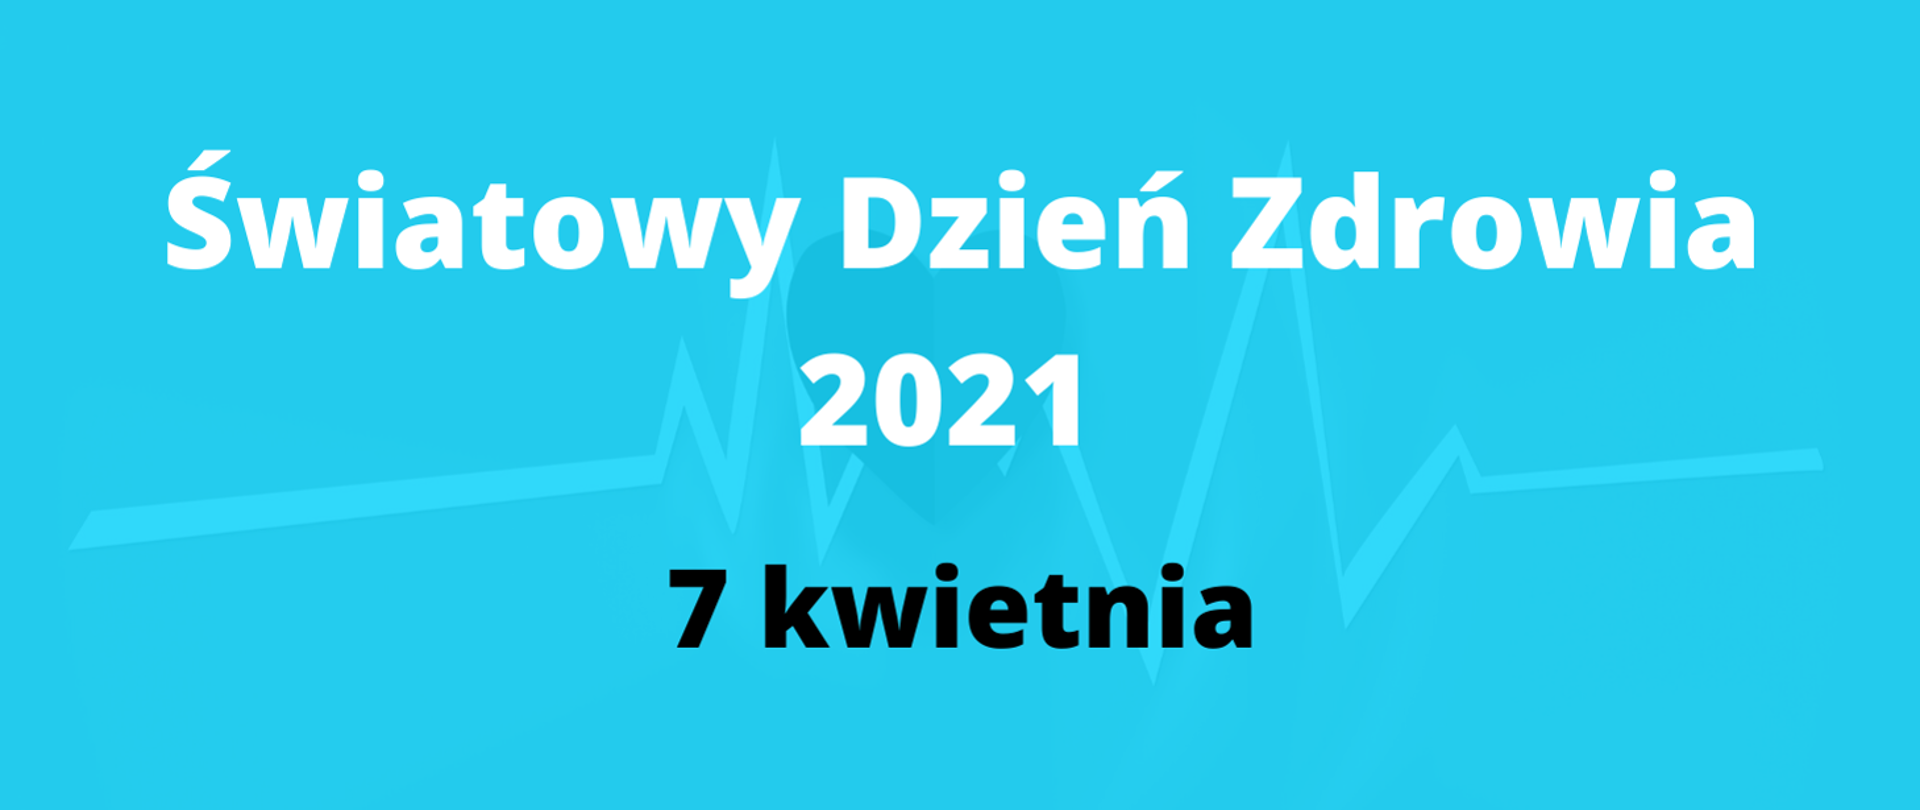 ZDZ_2021